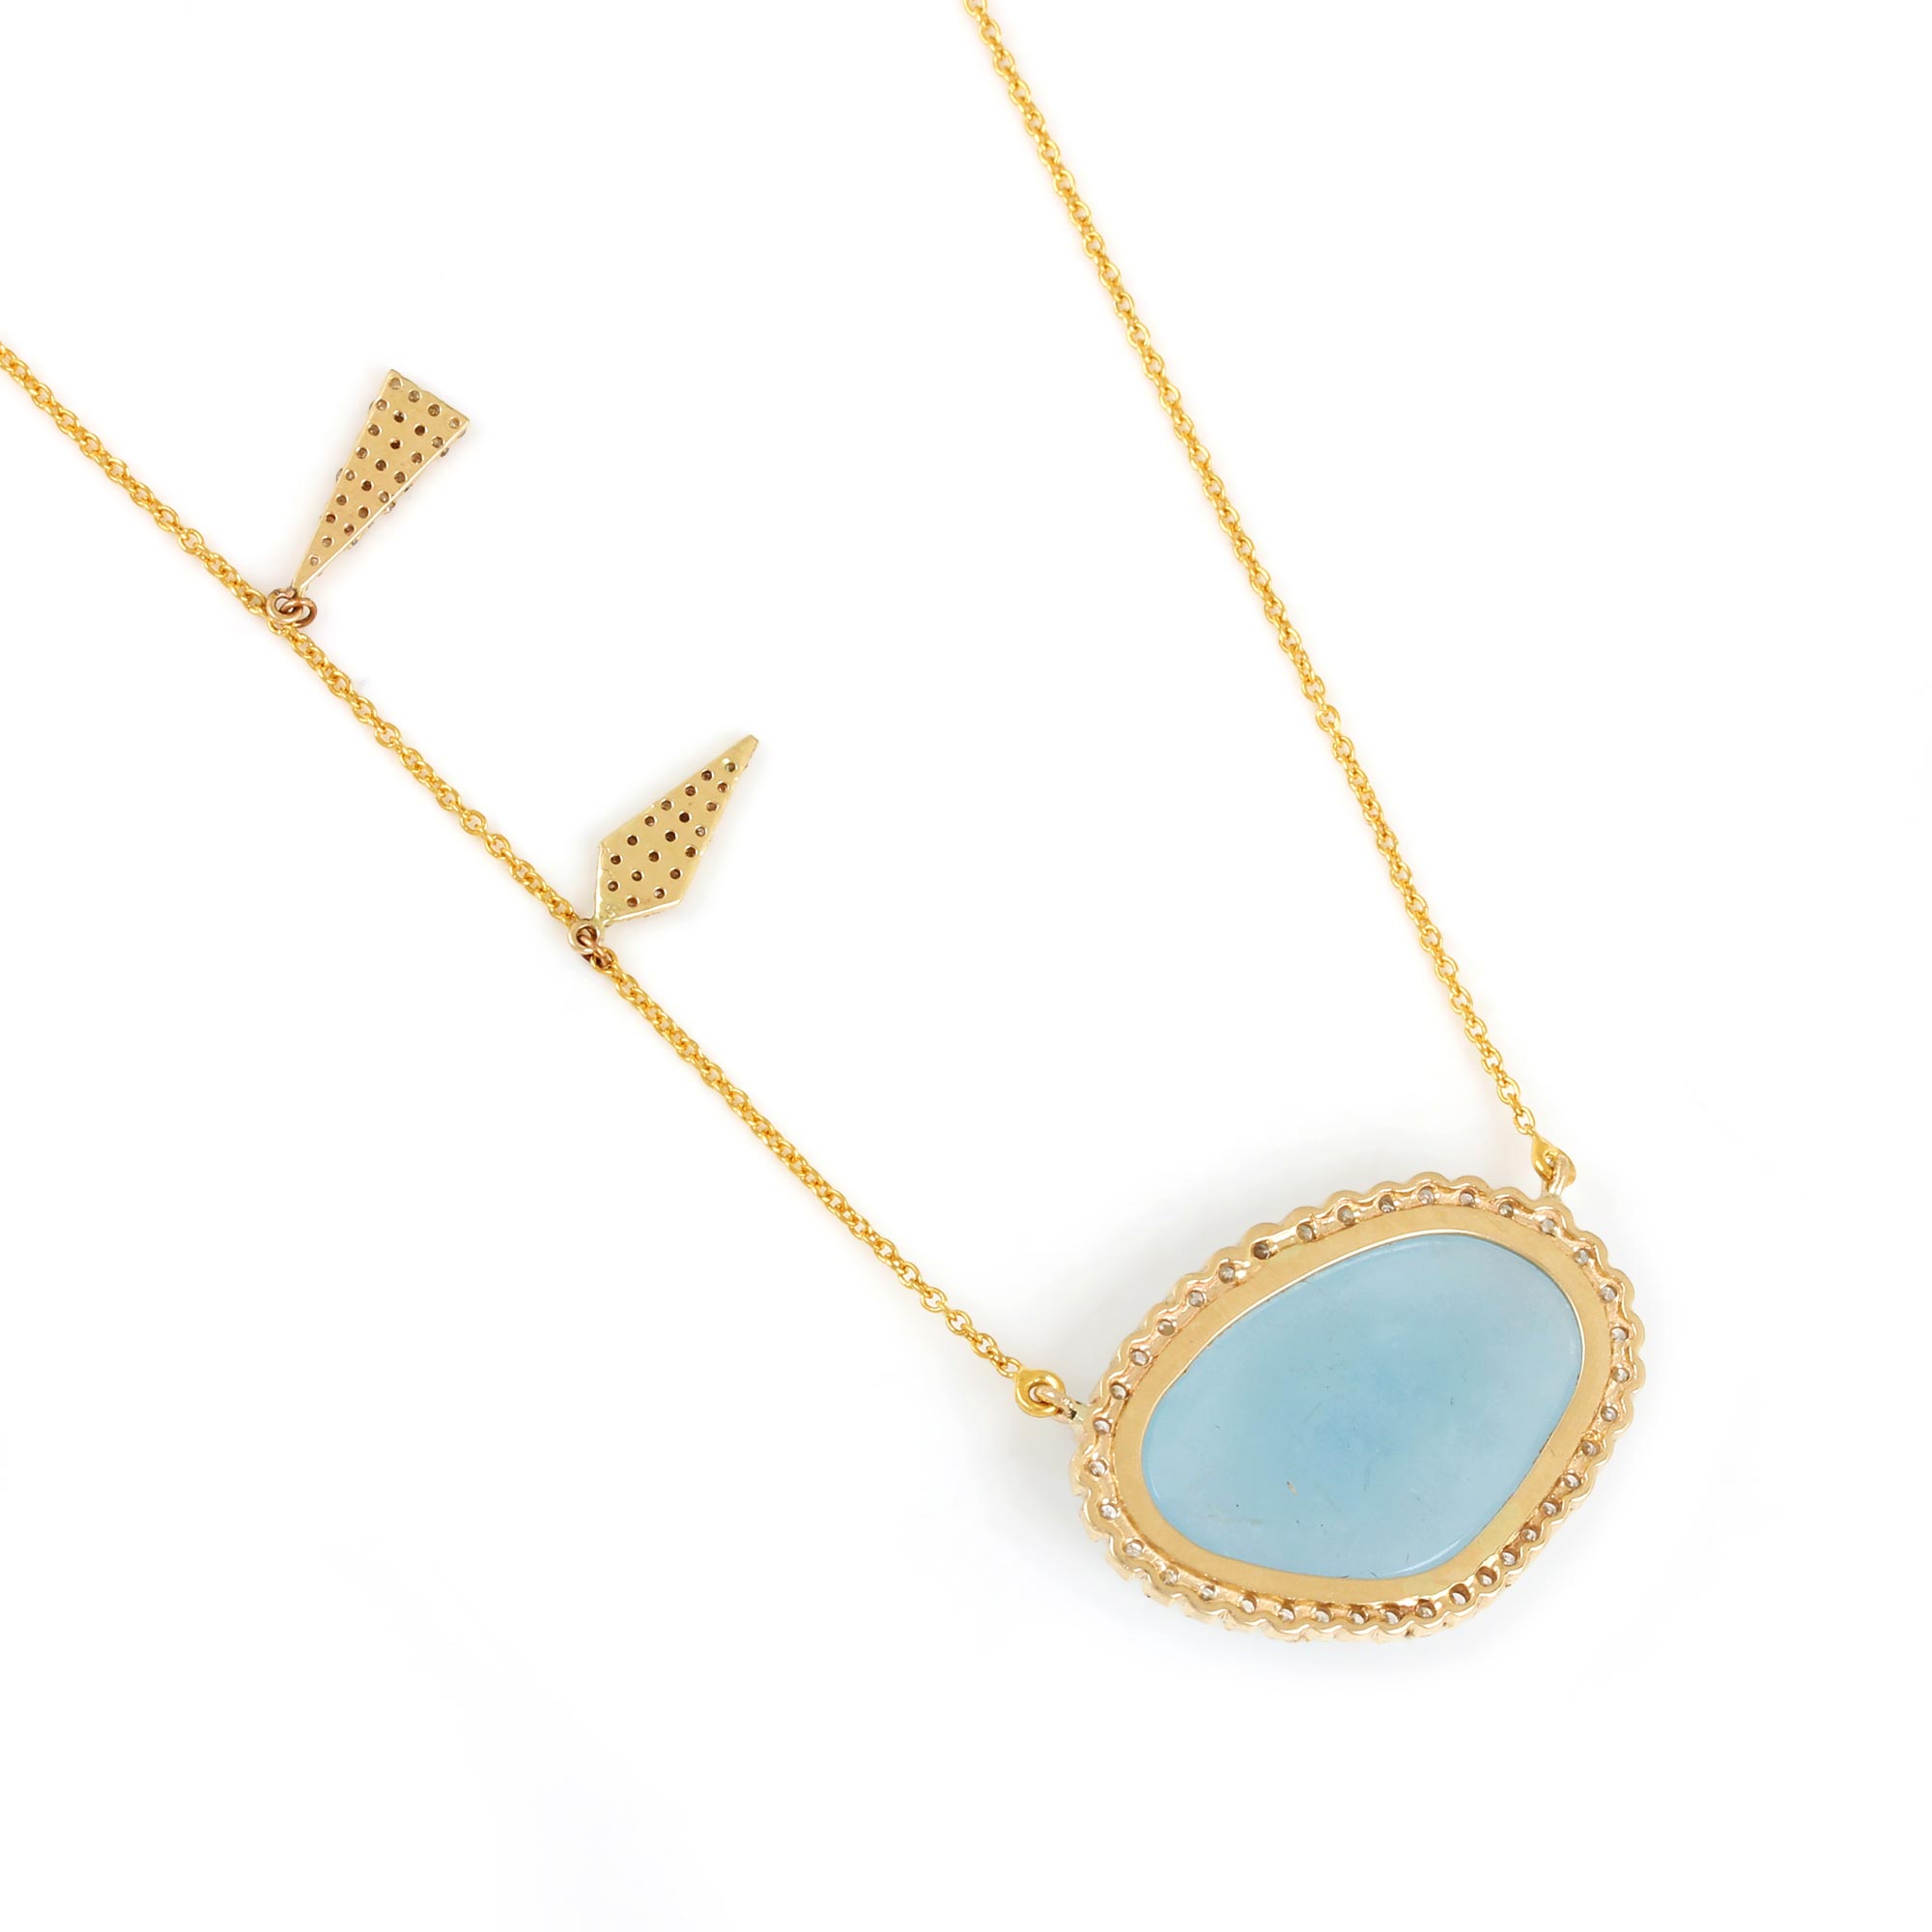 Aquamarine Pave Diamond Pendant Chain Necklace 14K Solid Gold Jewelry